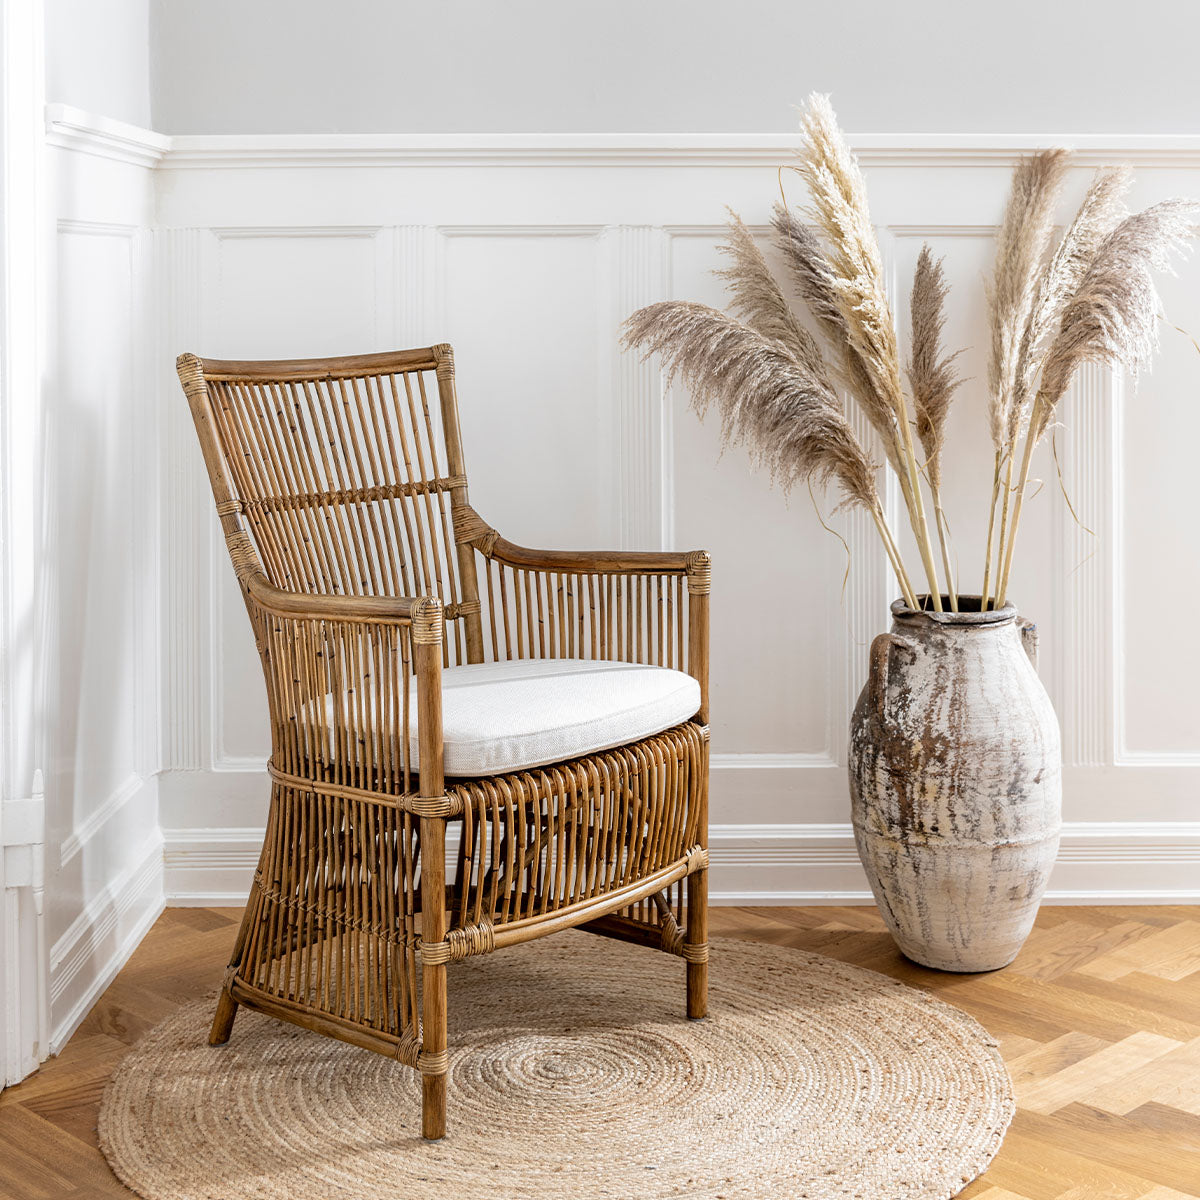 Rattan wicker chair | Davinci Dining Chair | Antique - Sika-Design.com